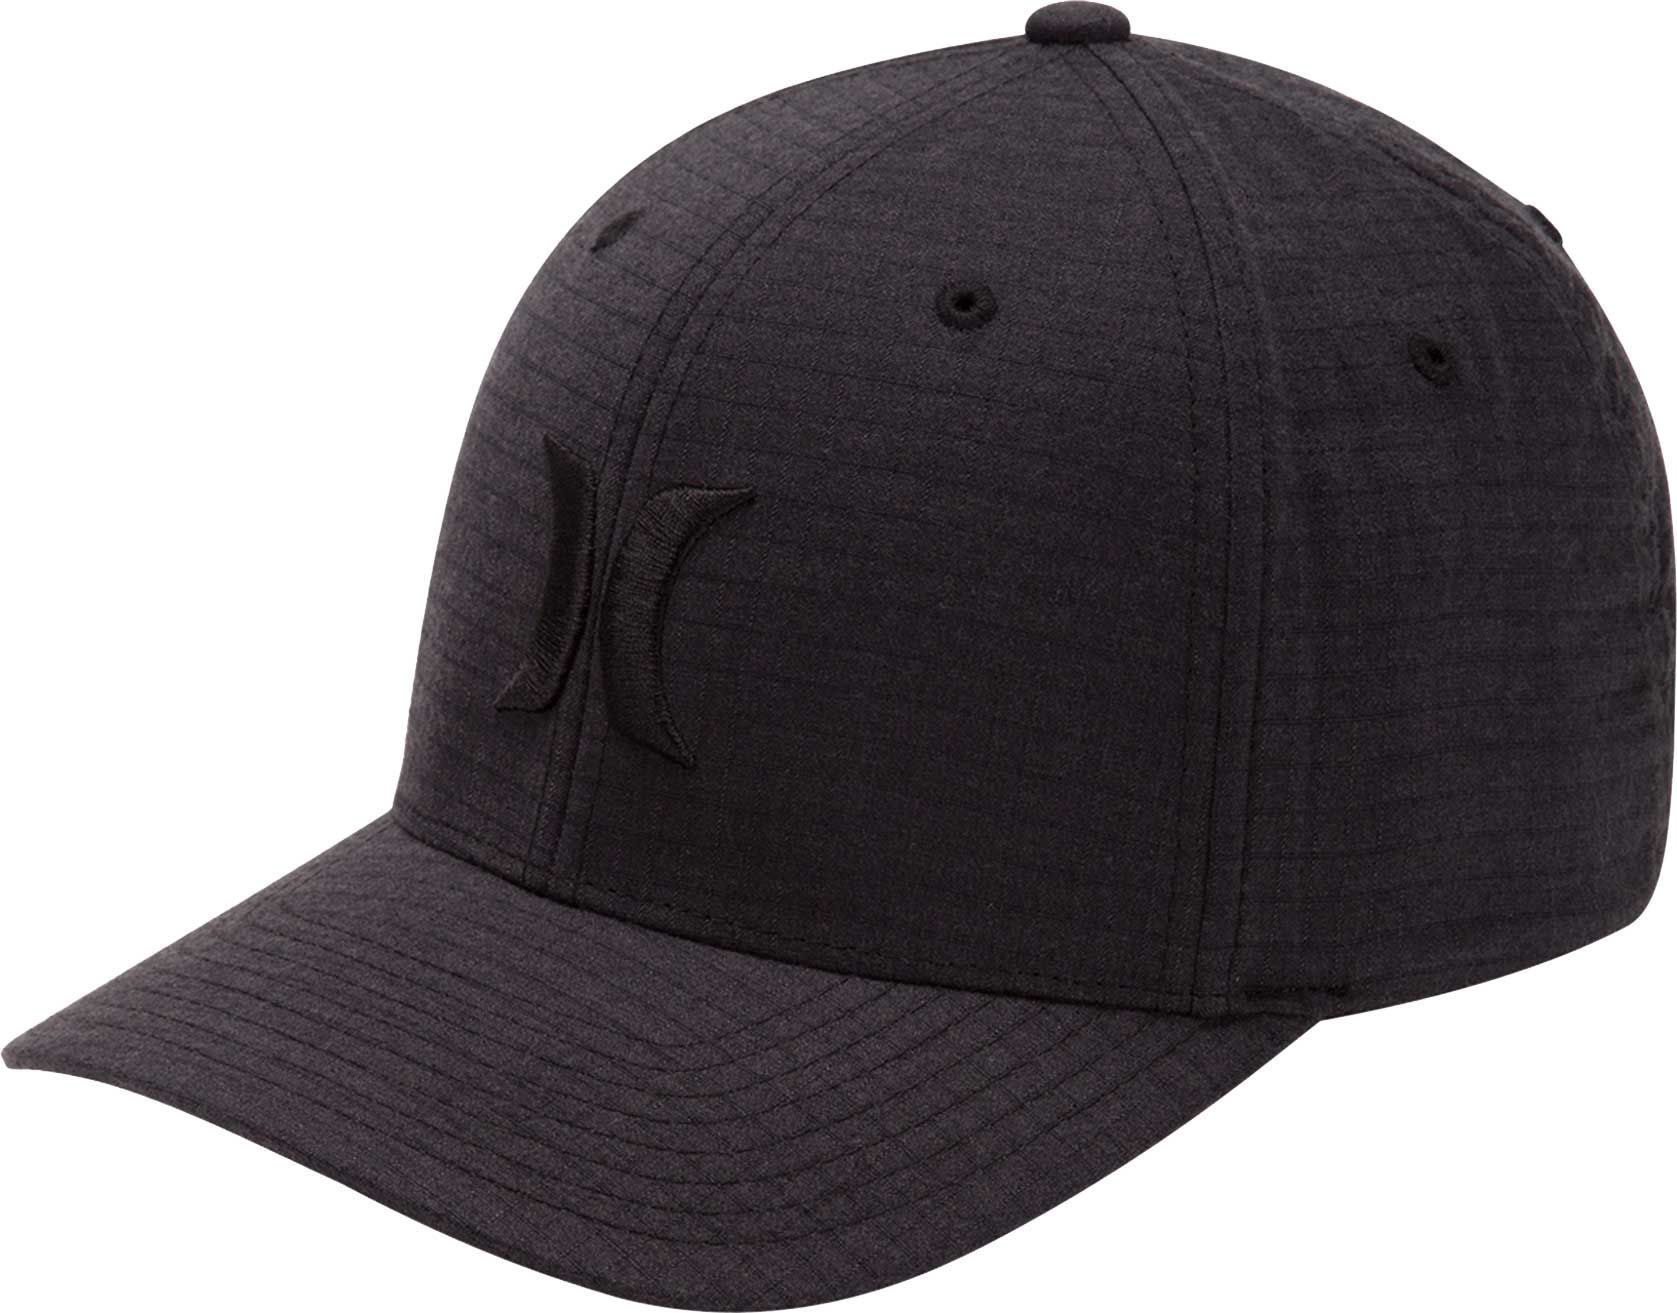 Hurley Men's Black Textures Hat, Small/Medium, Black/Black Ripstop | Dick's Sporting Goods